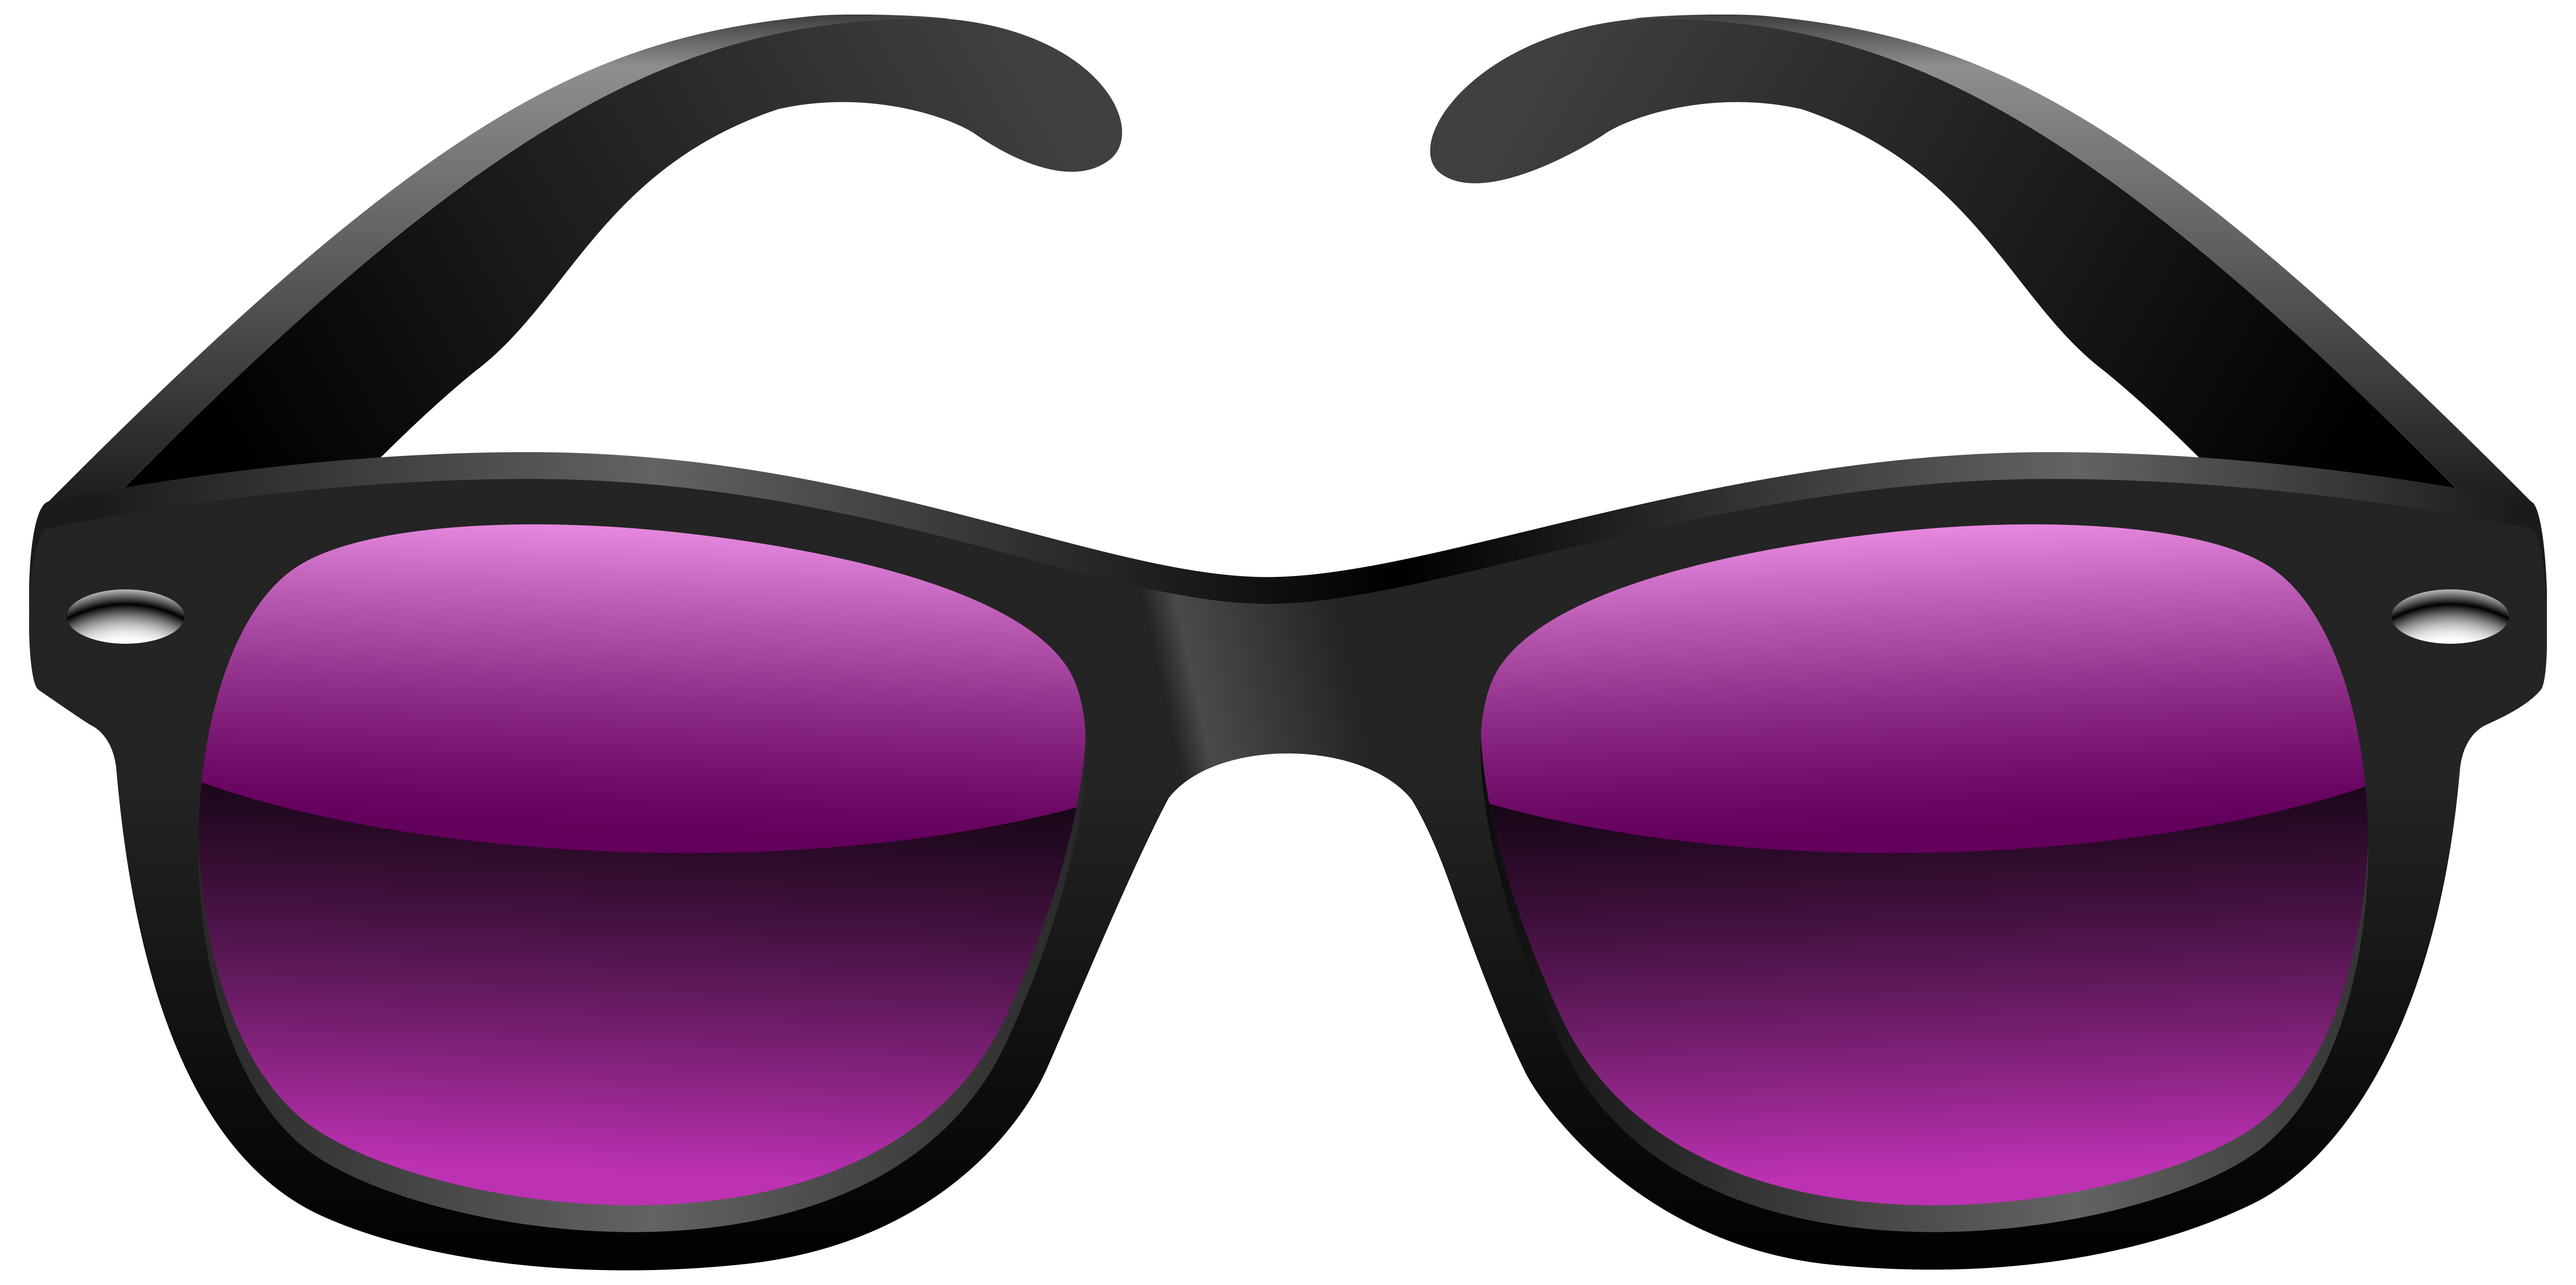 Black and purple png. Watermelon clipart sunglasses